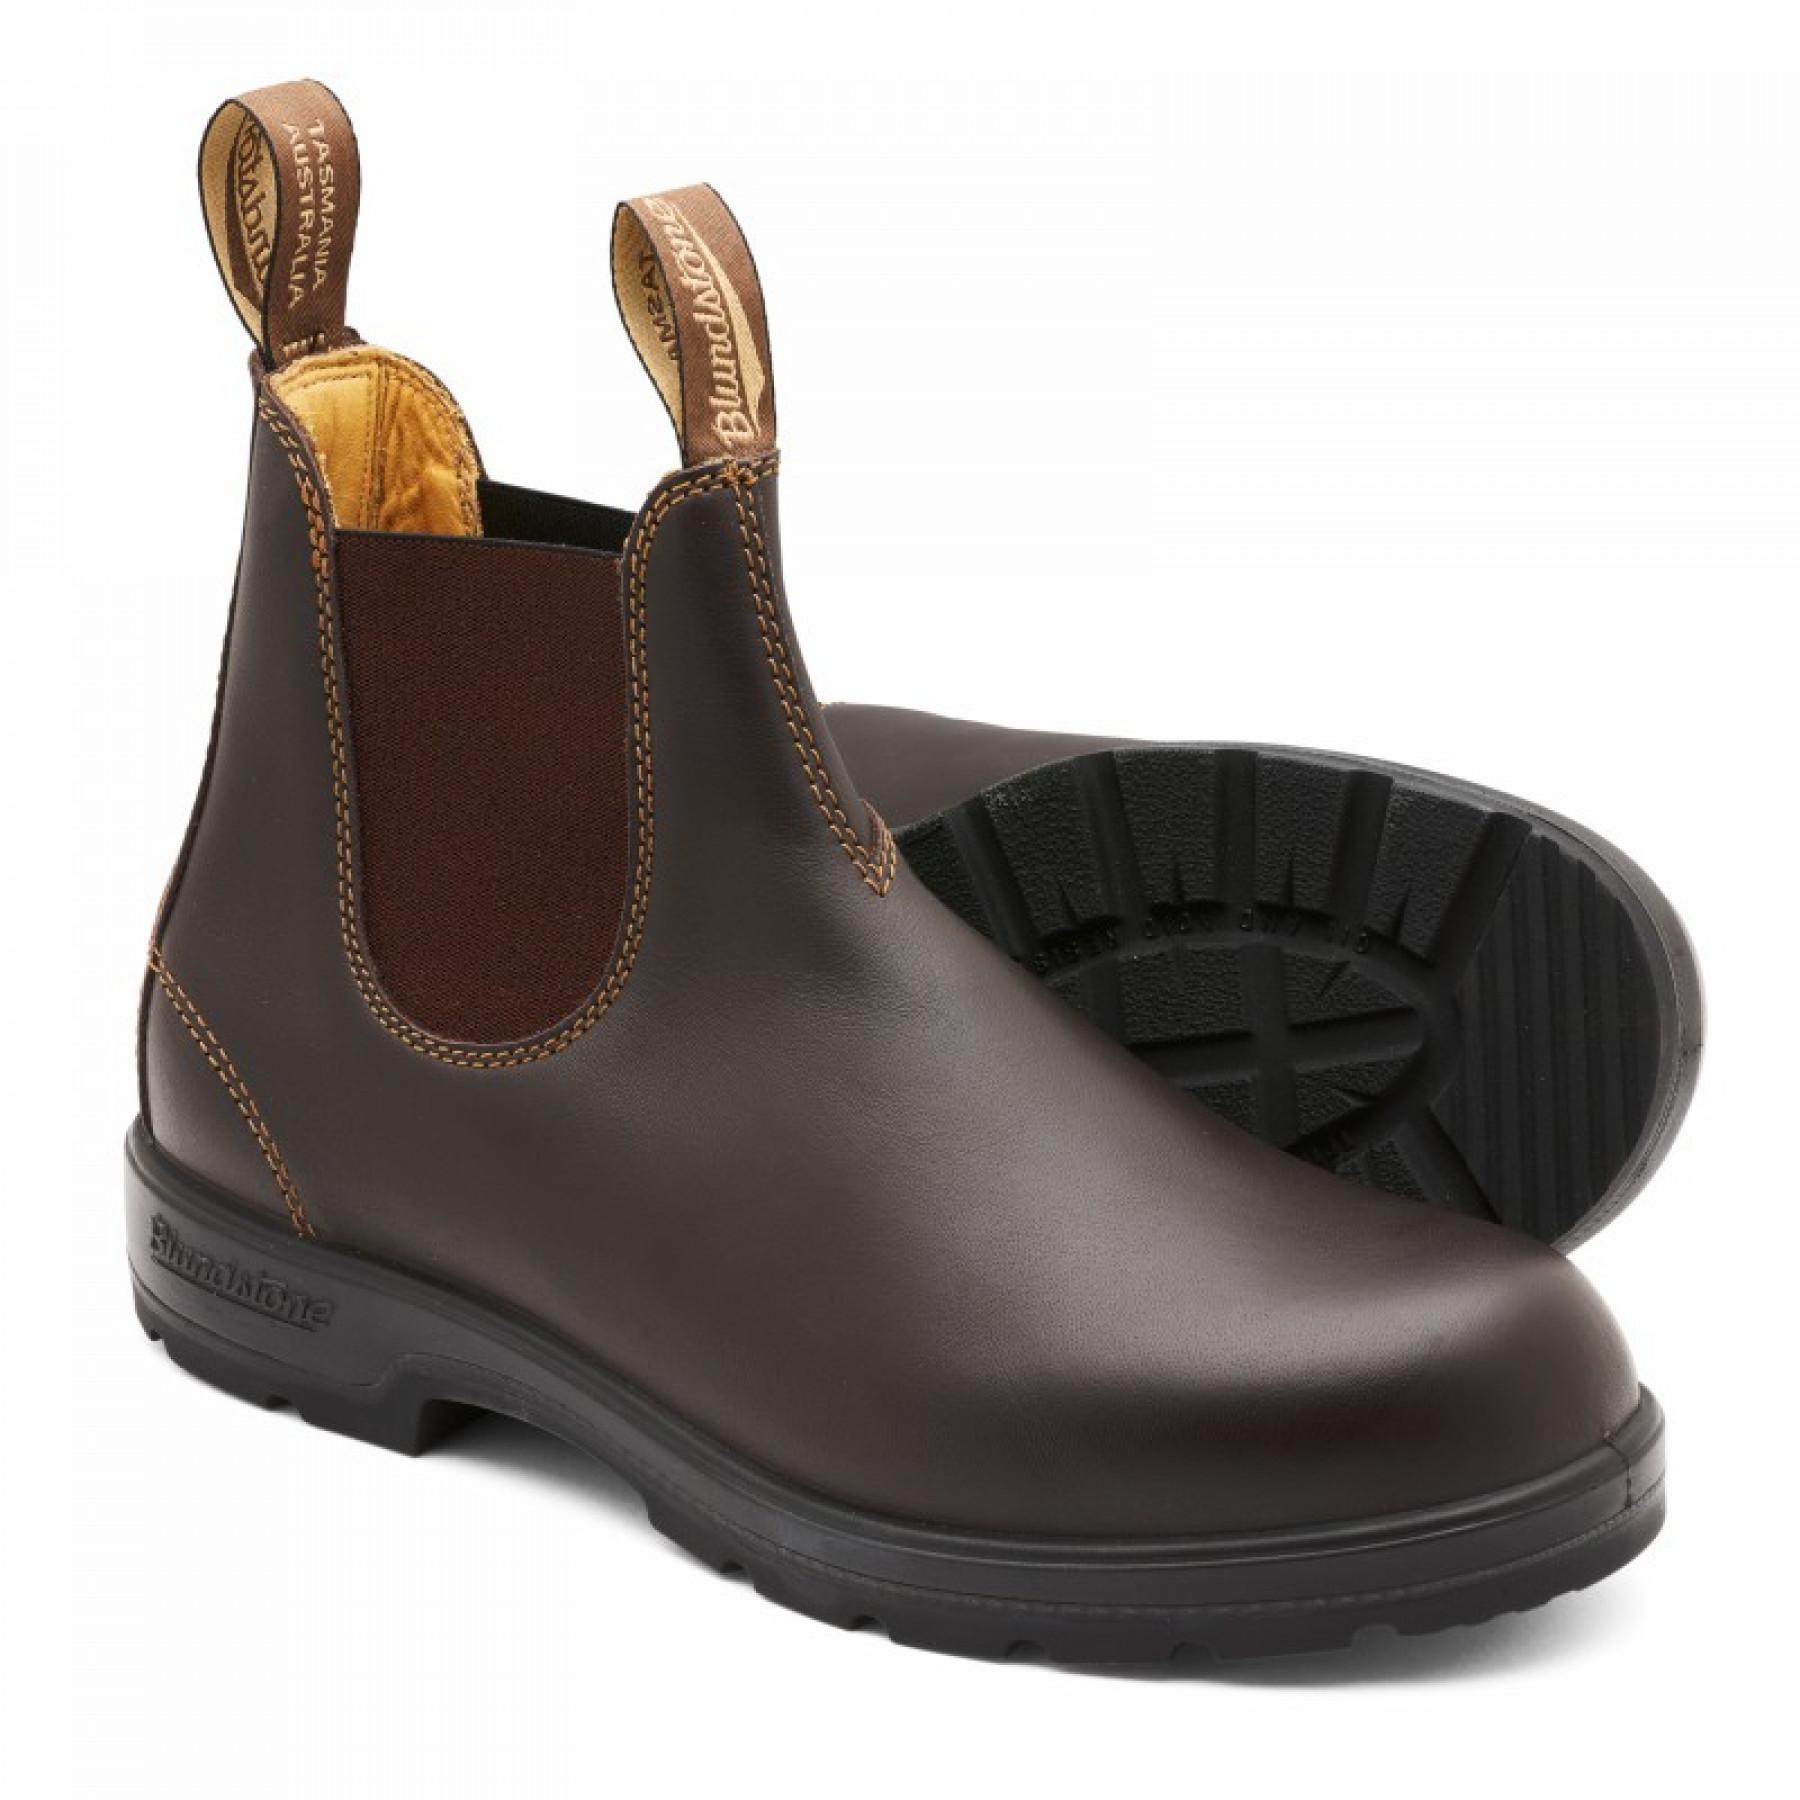 Schoenen Blundstone Classic Chelsea Boots 550 Walnut Brown